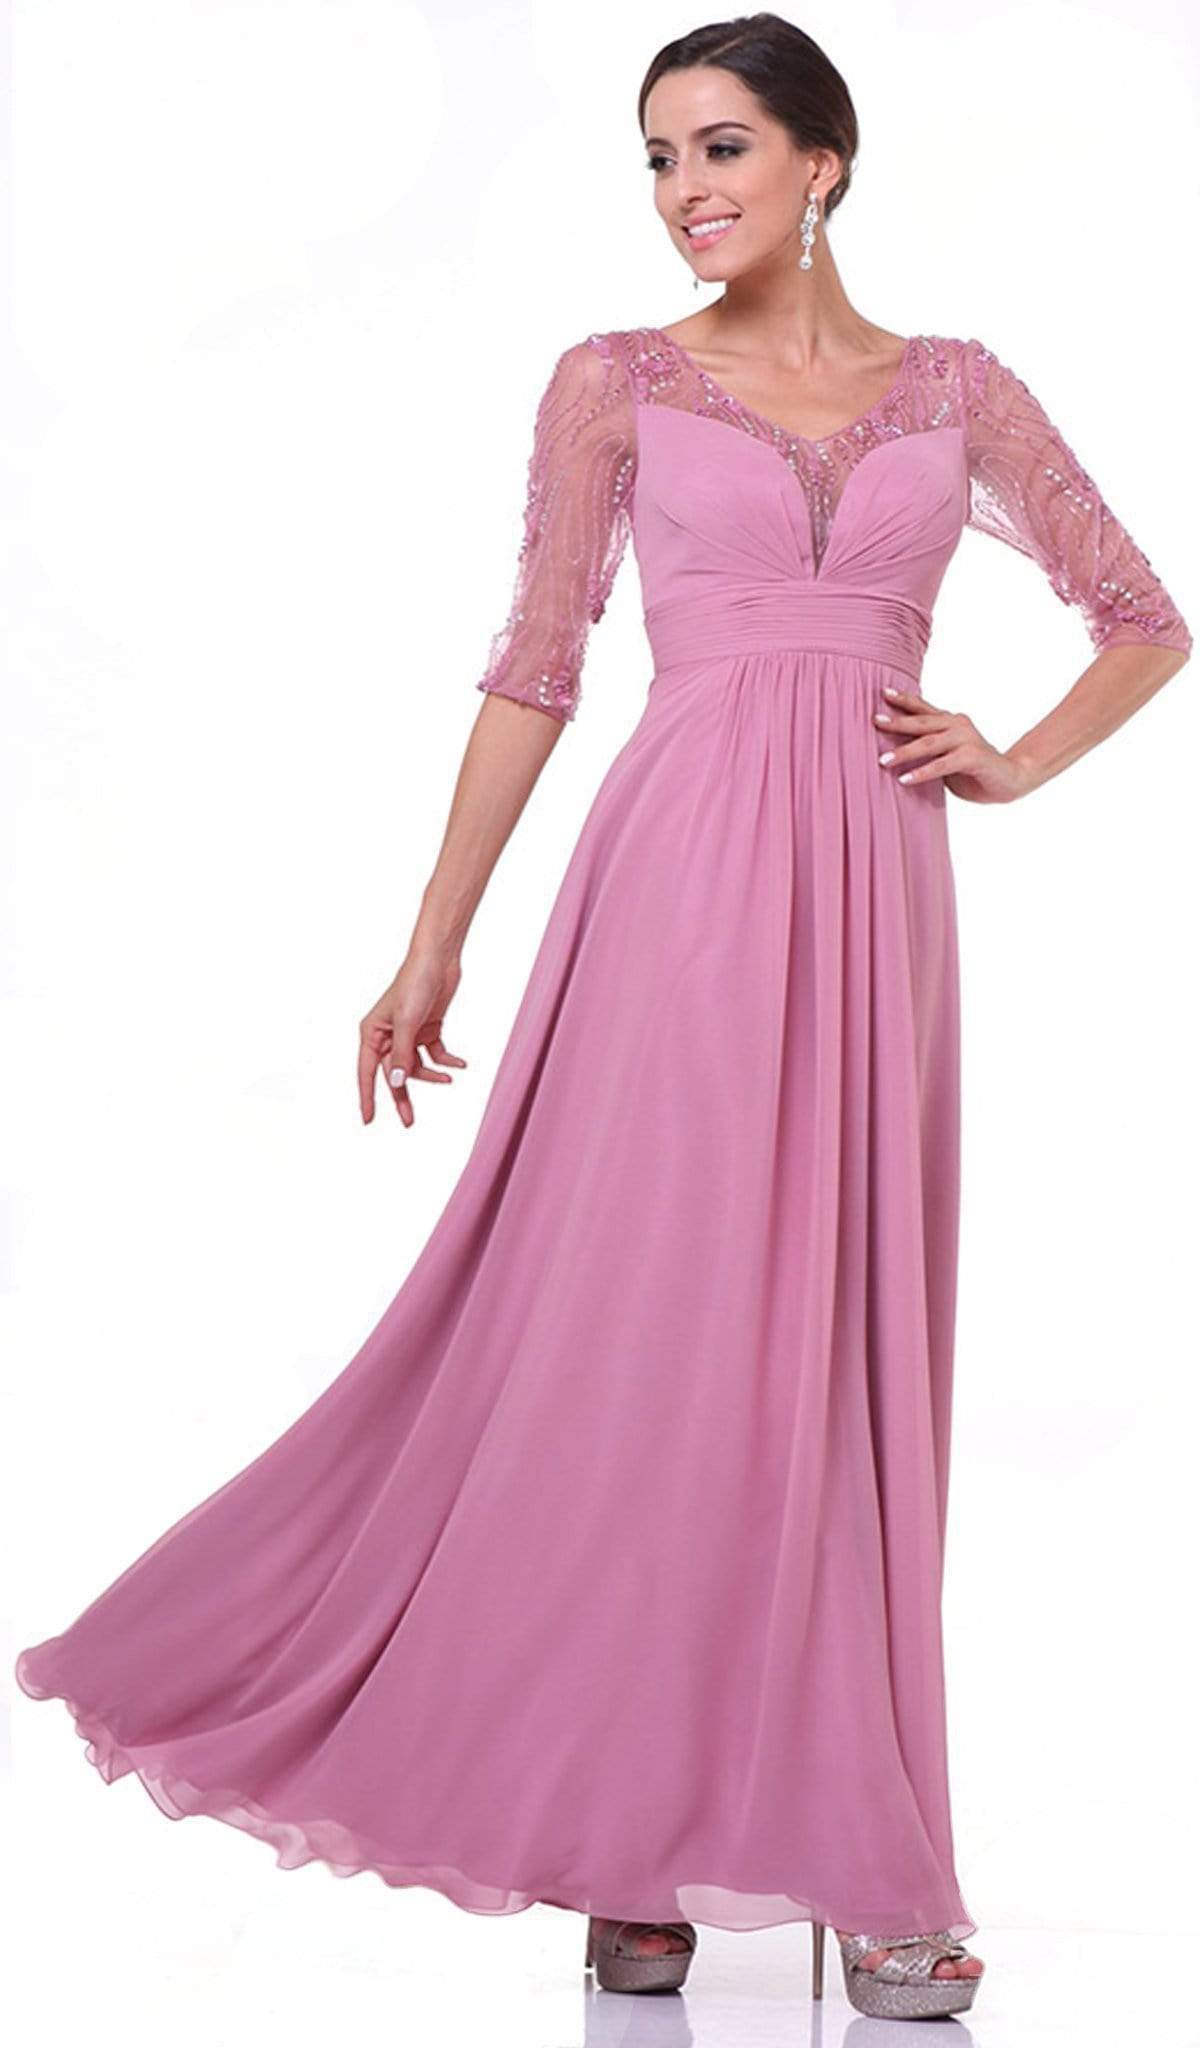 Cinderella Divine - 967 Sheer Quarter Length Sleeve Ruched A-line Dress Special Occasion Dress 2 / Rose